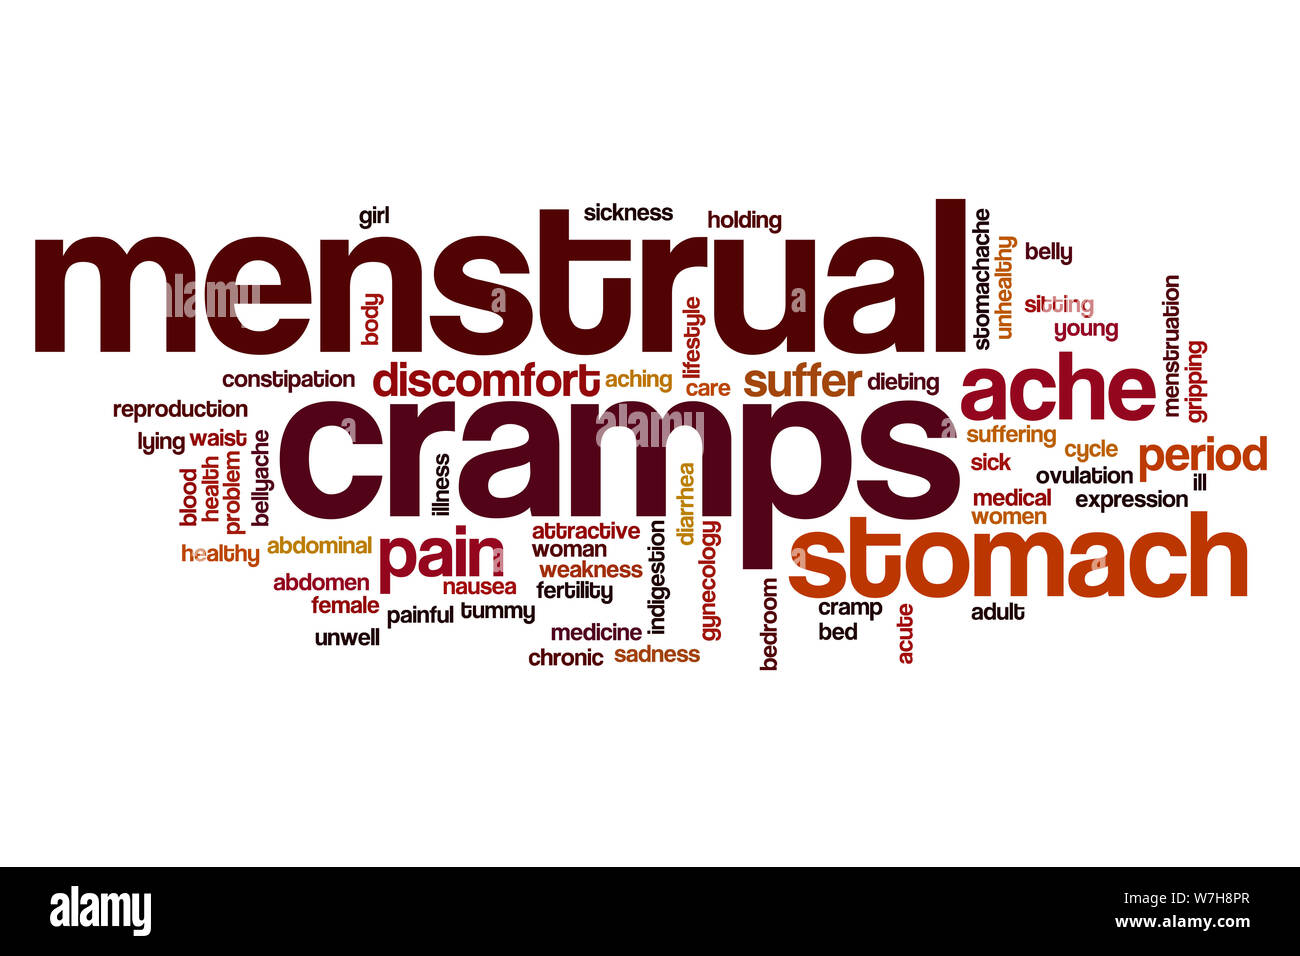 Menstrual cramps word cloud concept Stock Photo